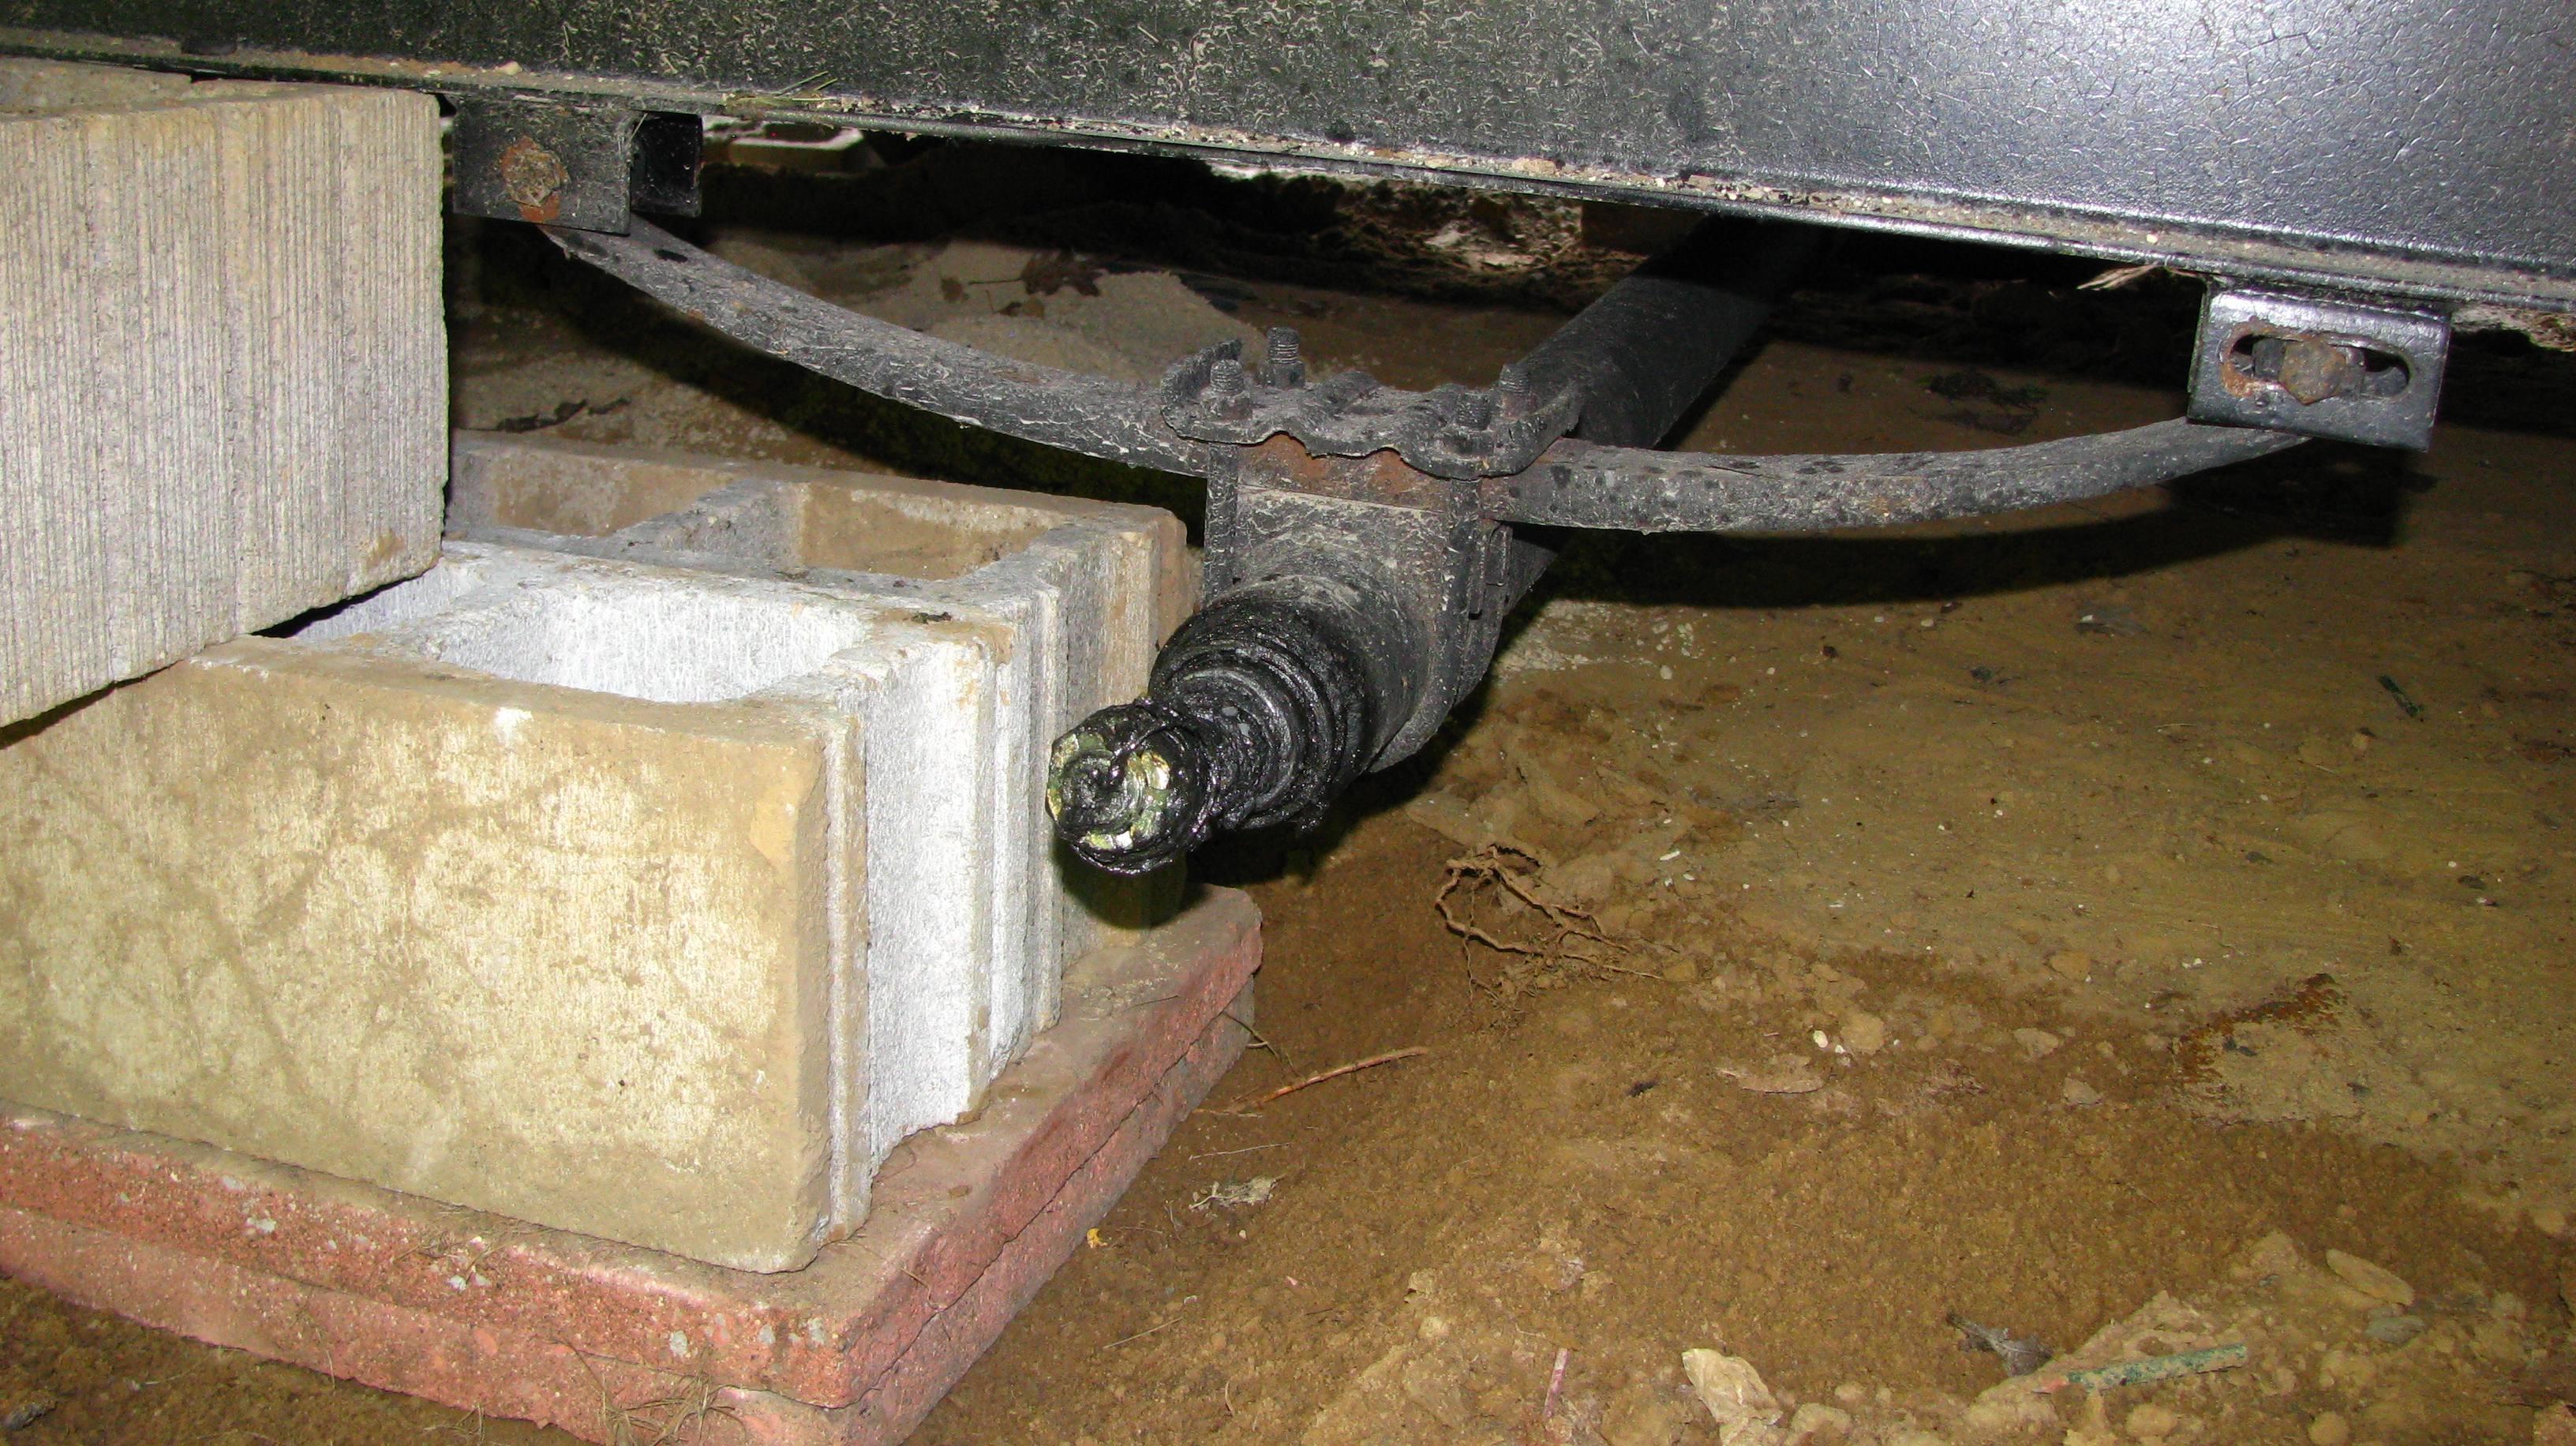 bent hub and axle